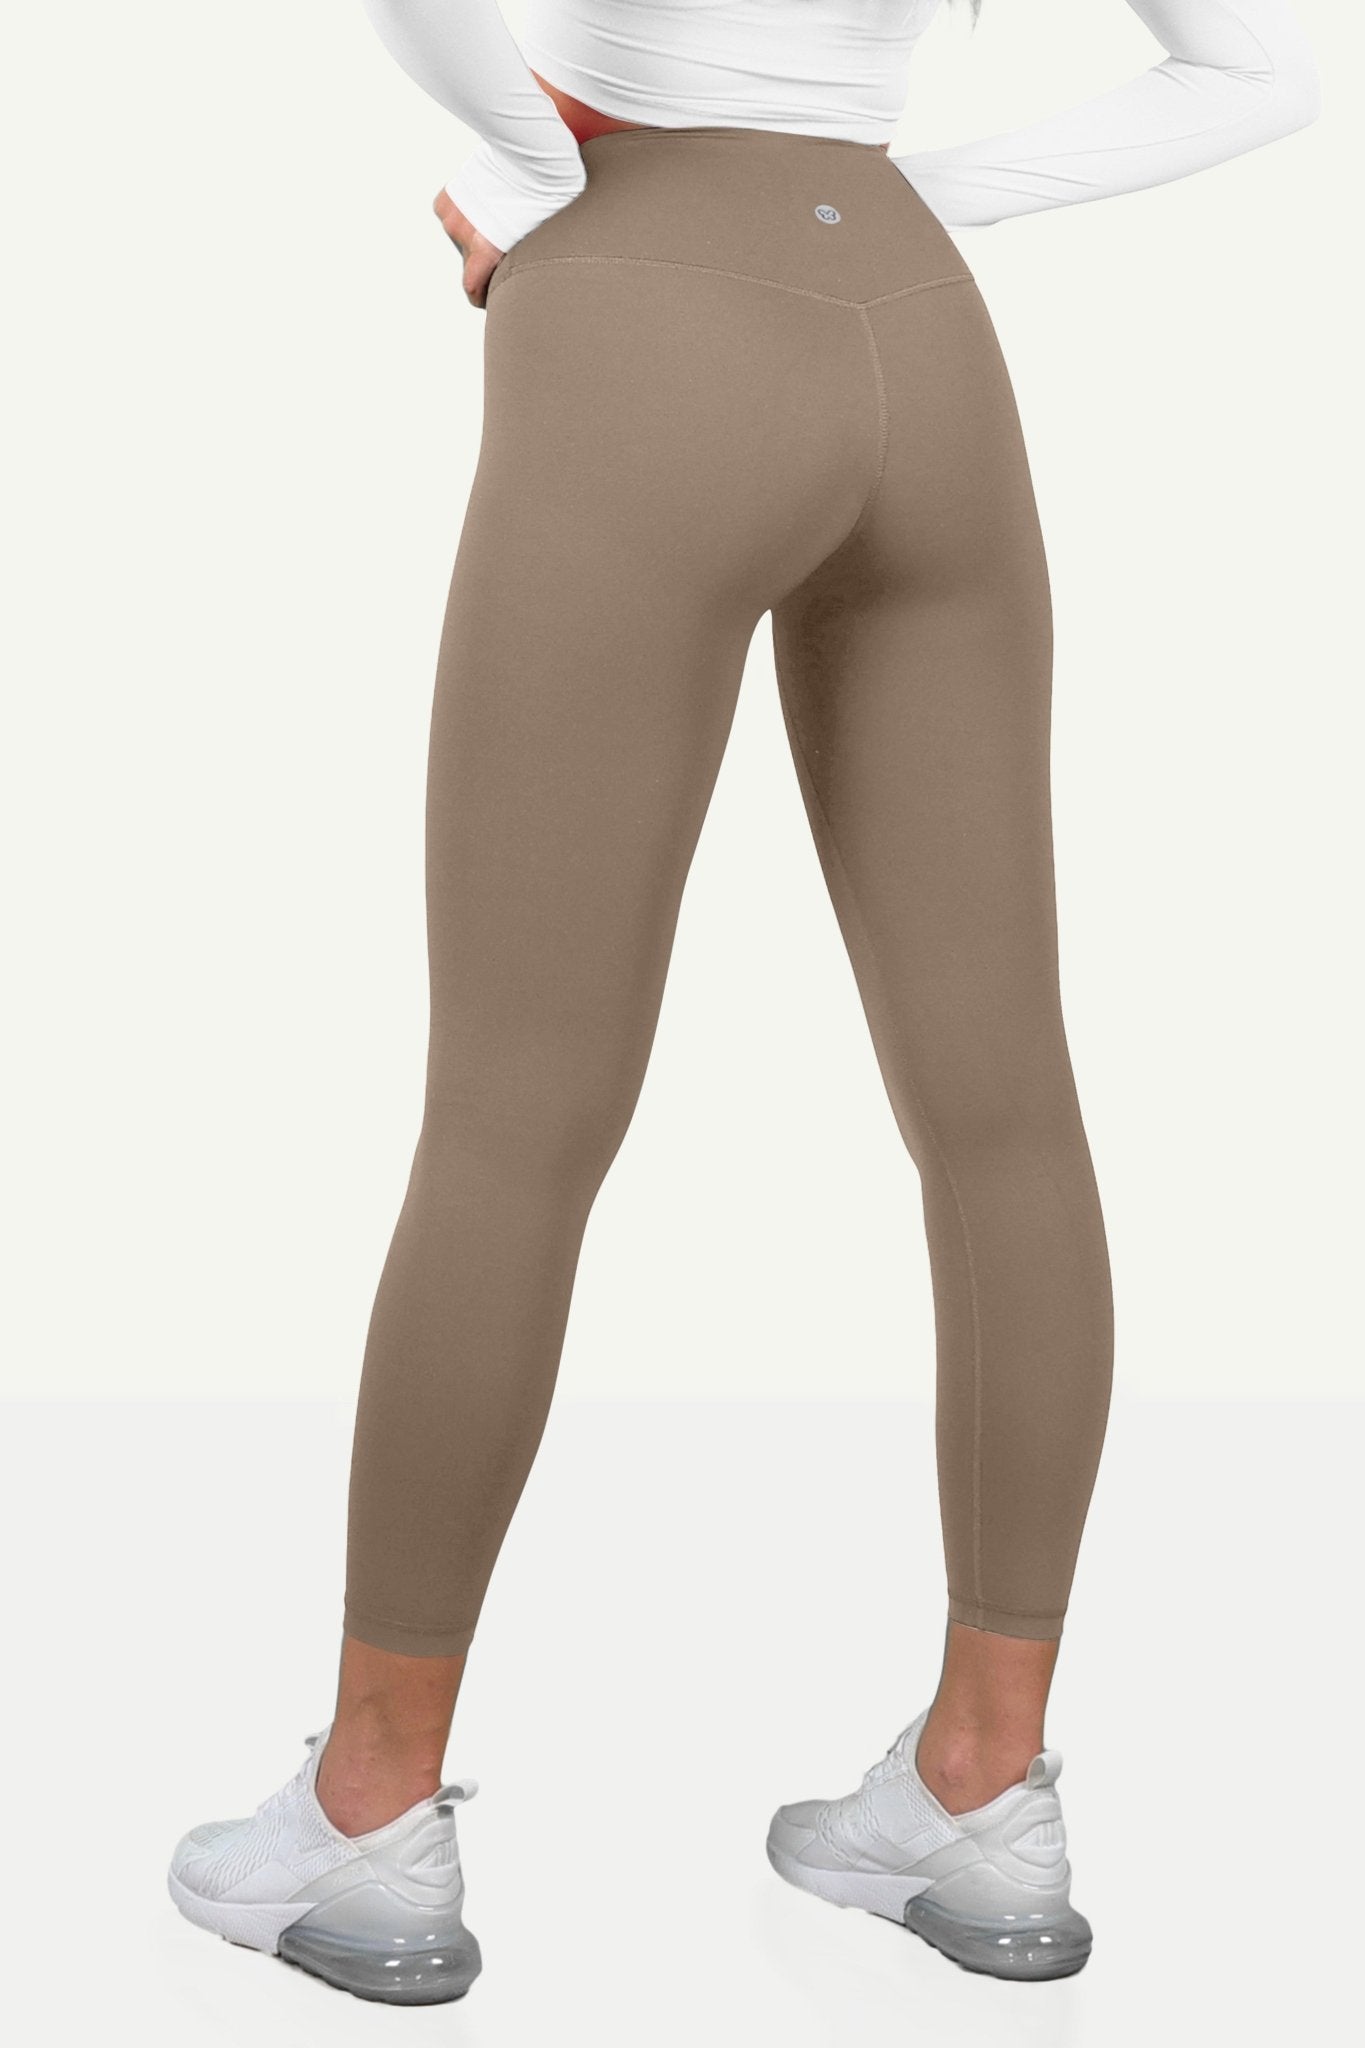 71% OFF on Rock Paper Scissors Premium Gym wear/Active Wear Tights  Strechable Leggings Yoga Pants Womens Workout Tights Gym Tight on Amazon |  PaisaWapas.com